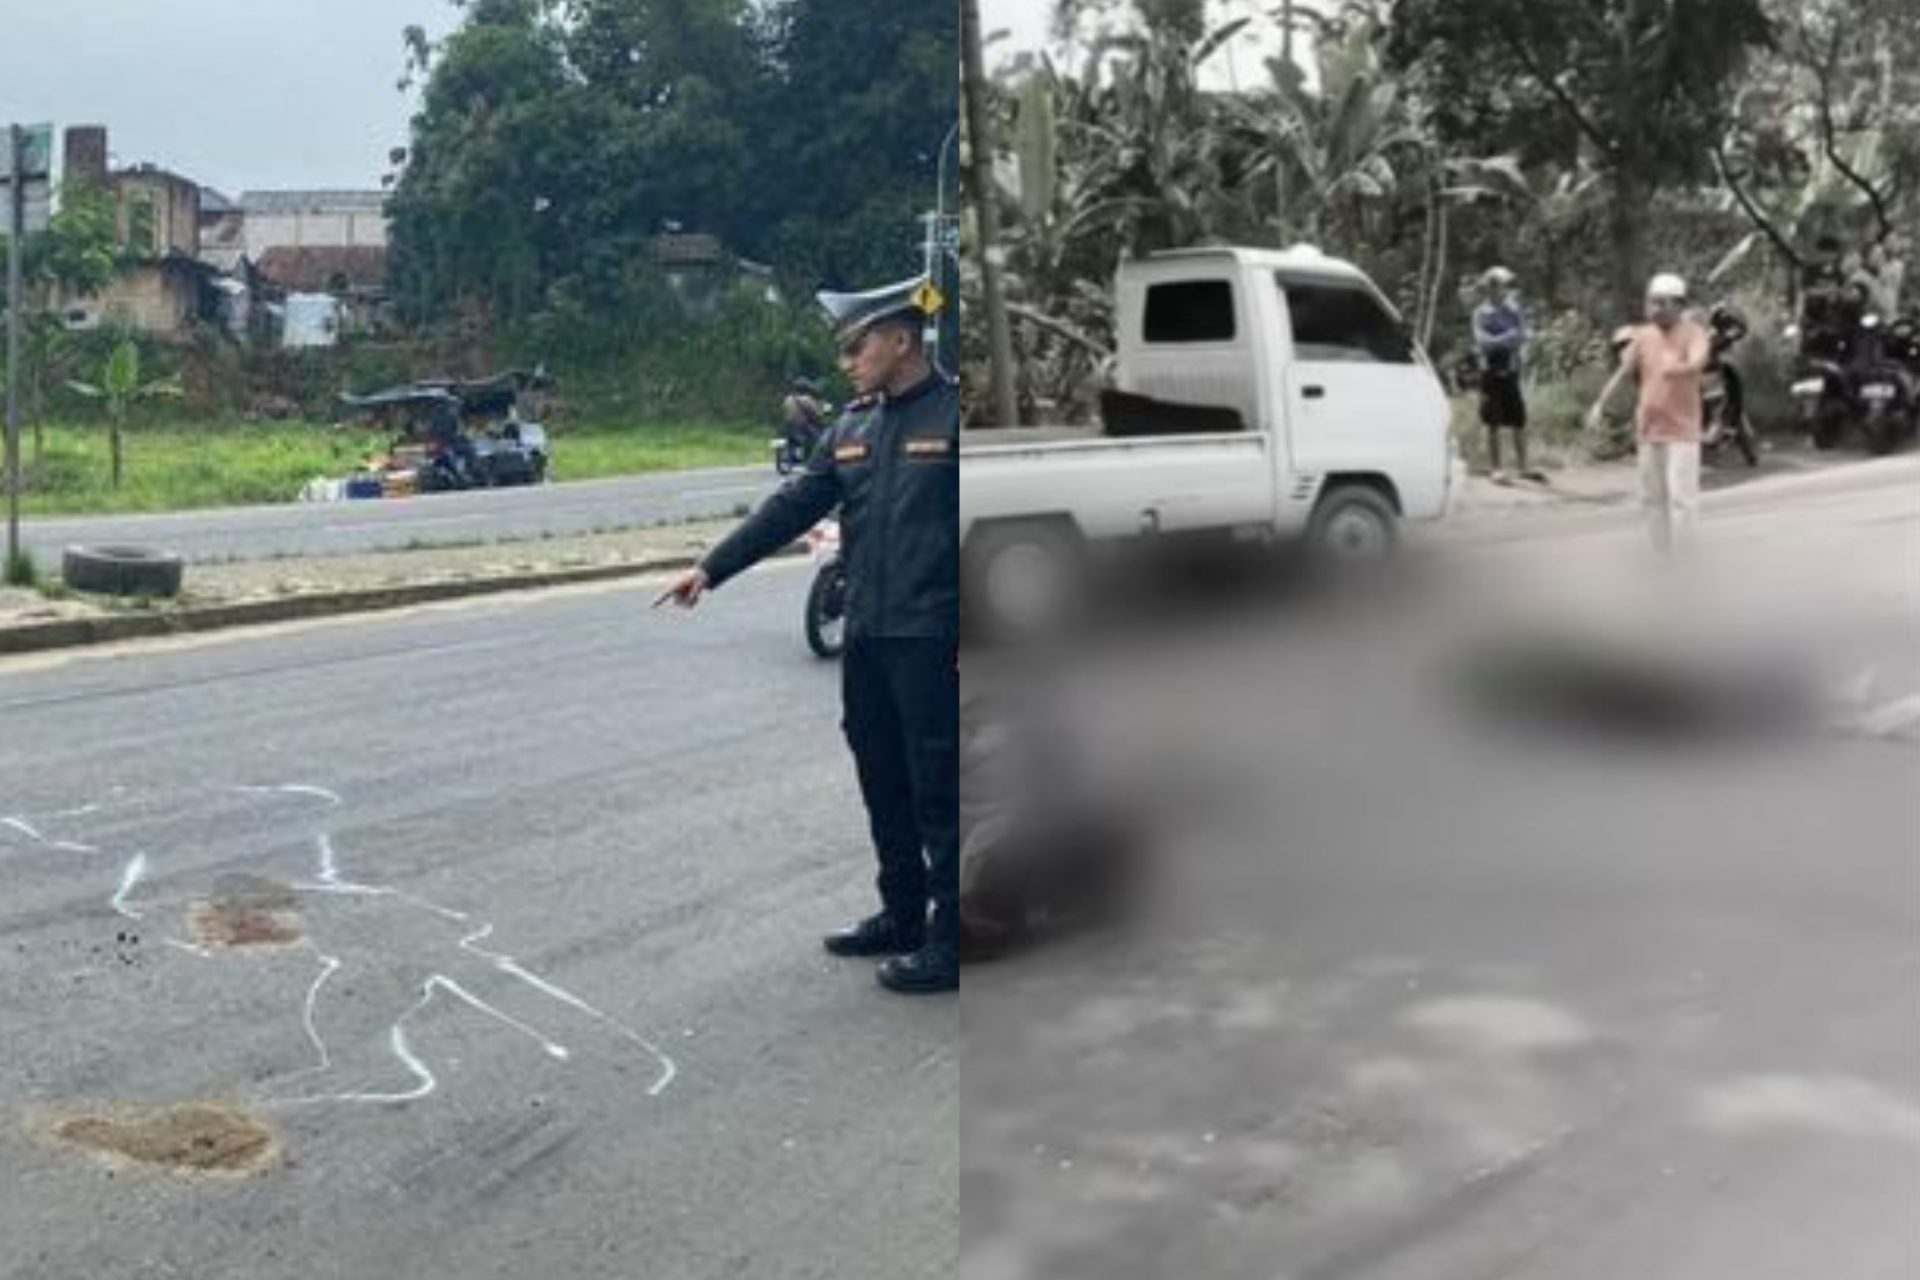 Tragis, dua remaja personel drumband di Sukabumi tewas terseret bus